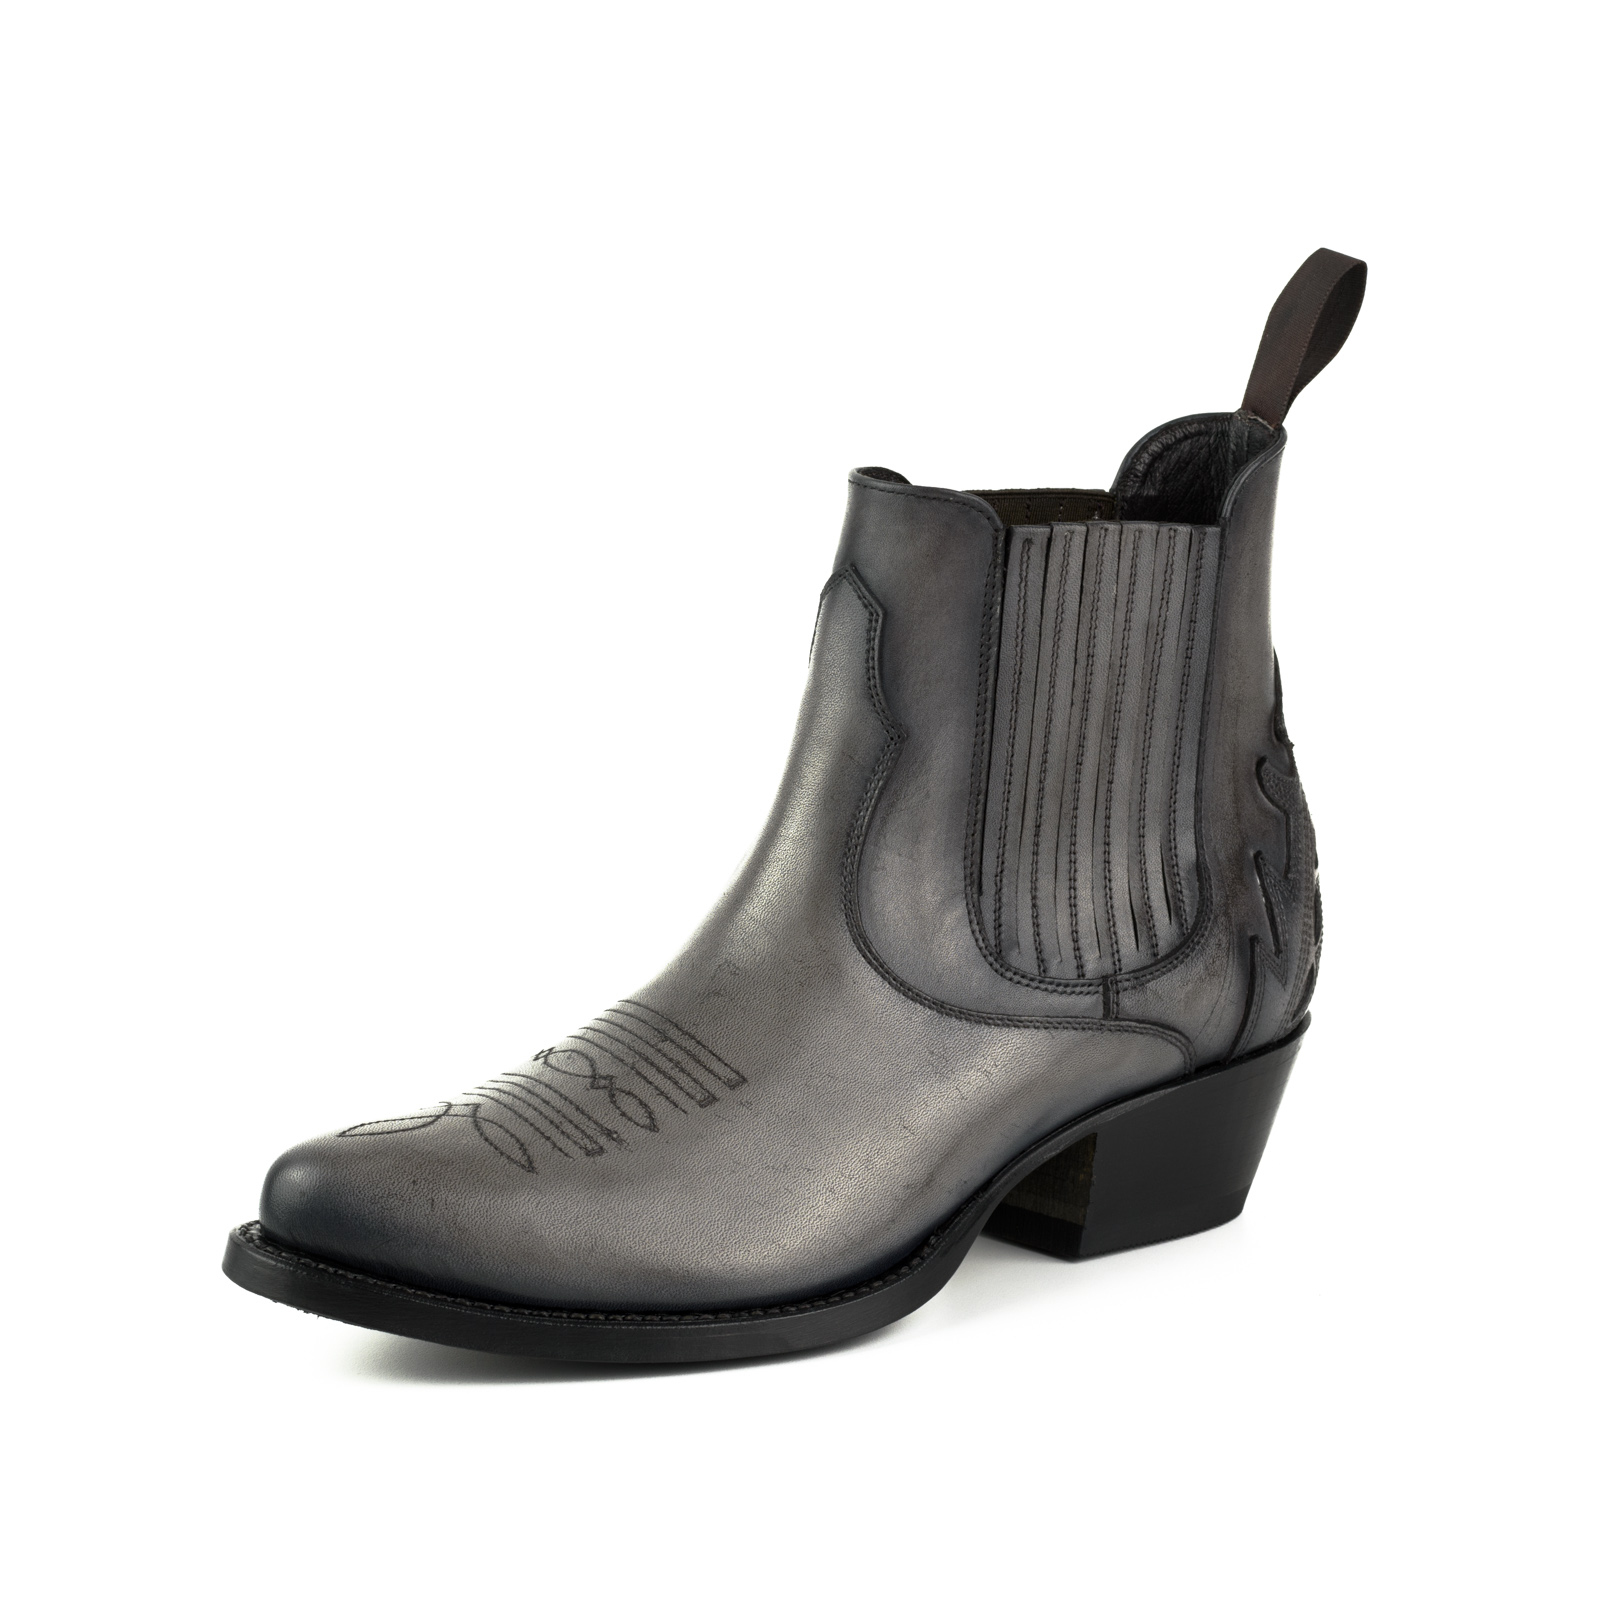 mayura-boots-modelo-marilyn-2487-gris-1